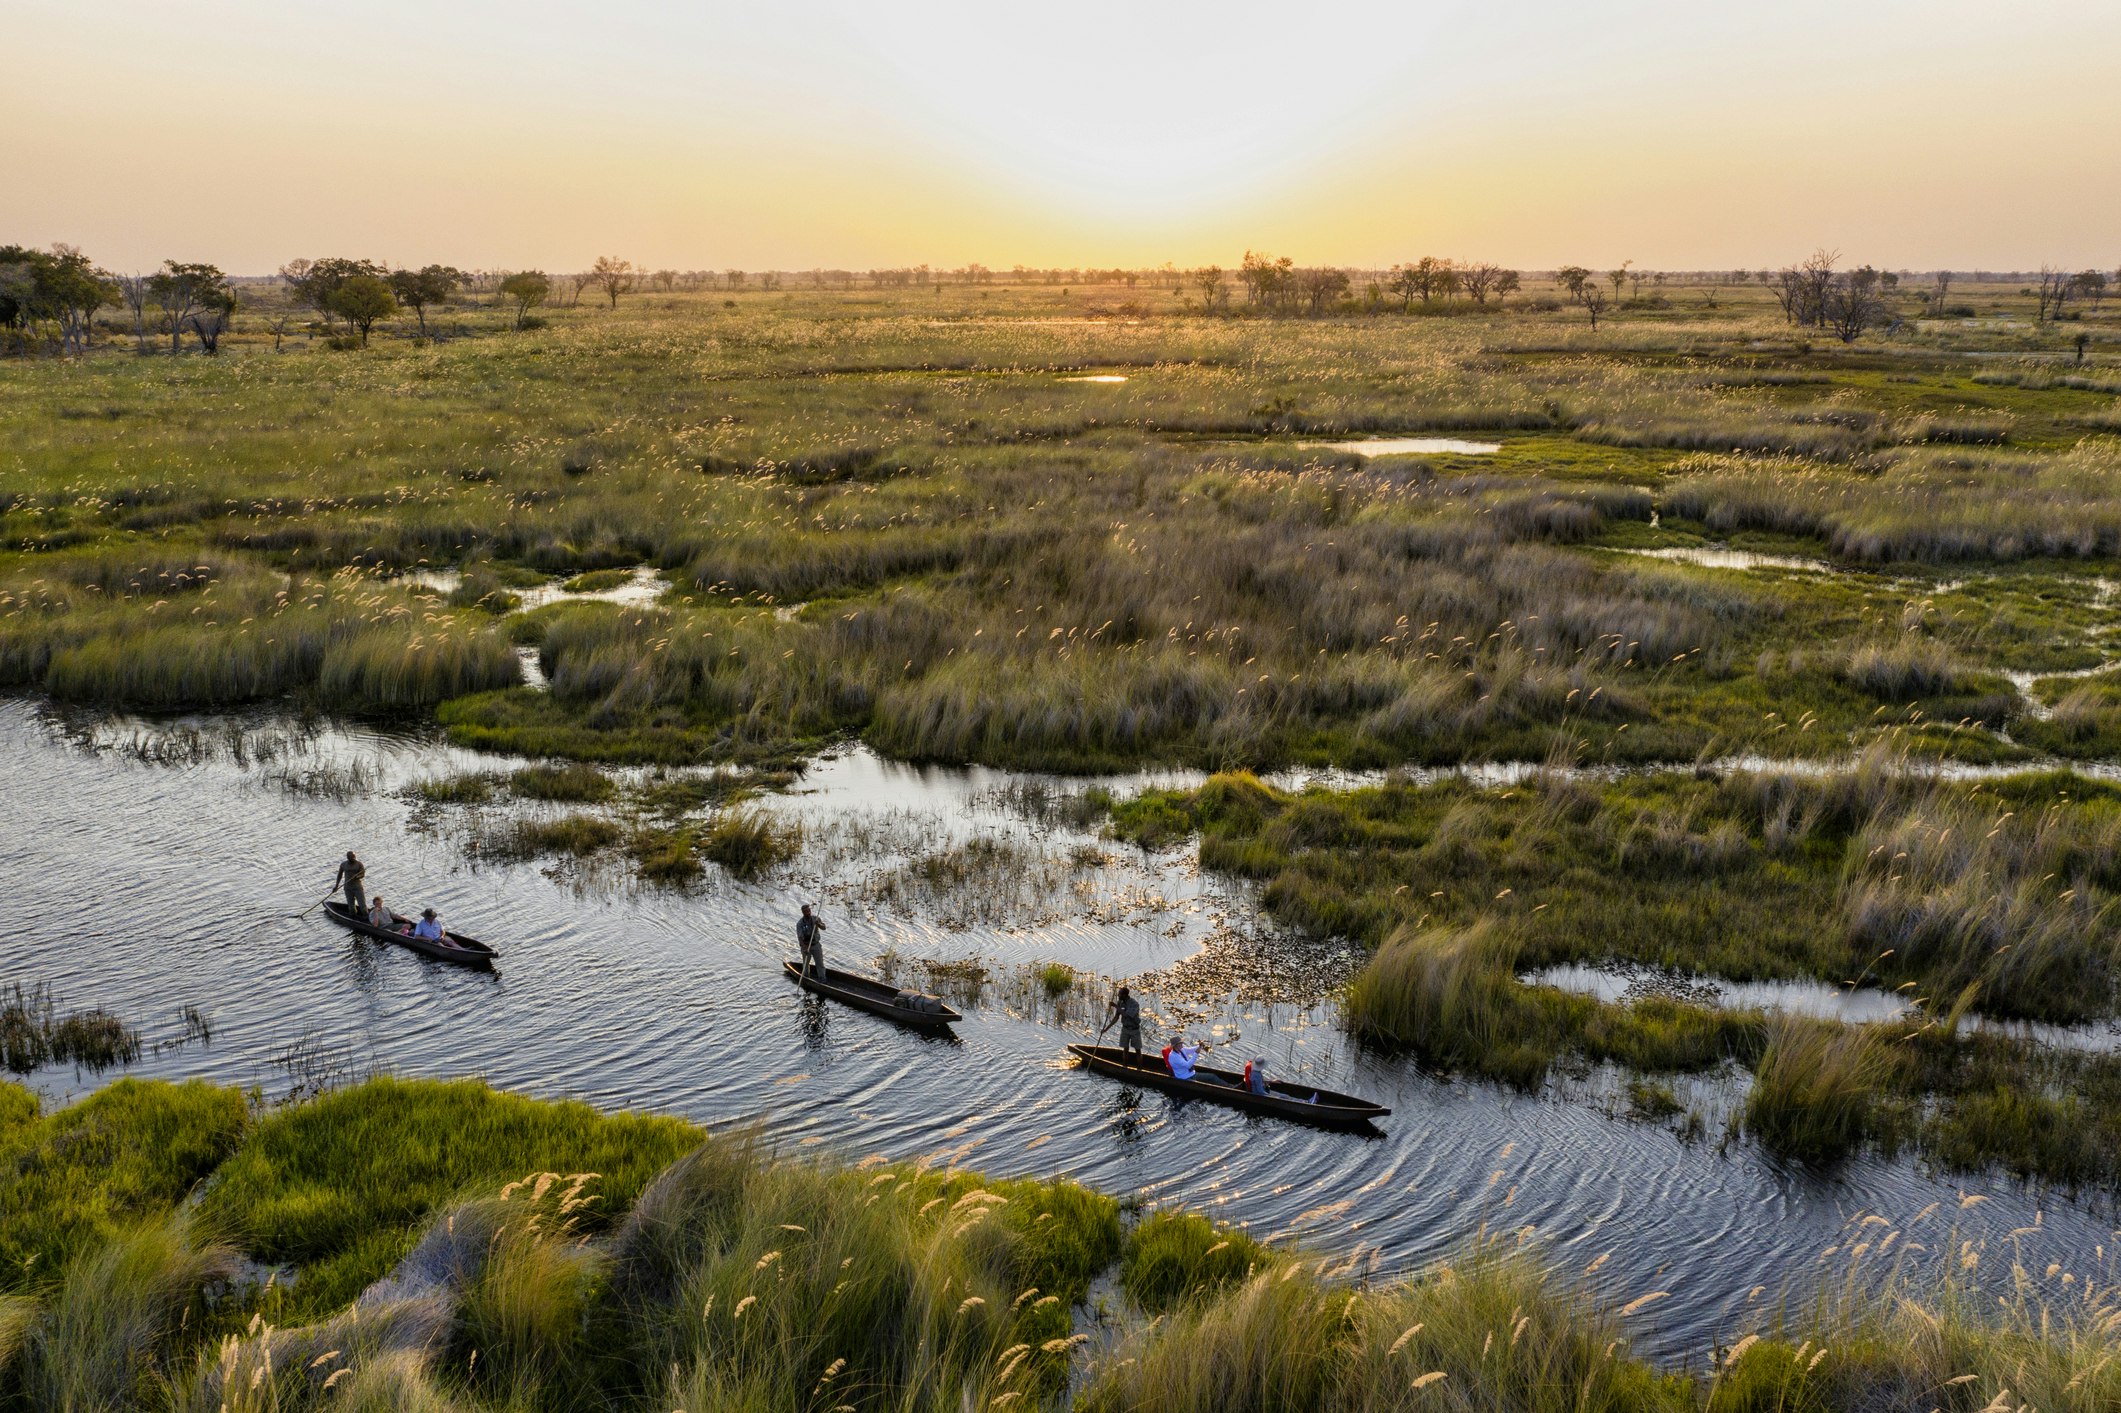 Tourists heading out on a mokoro (wooden canoe) safari along the waterways of the Okavango Delta